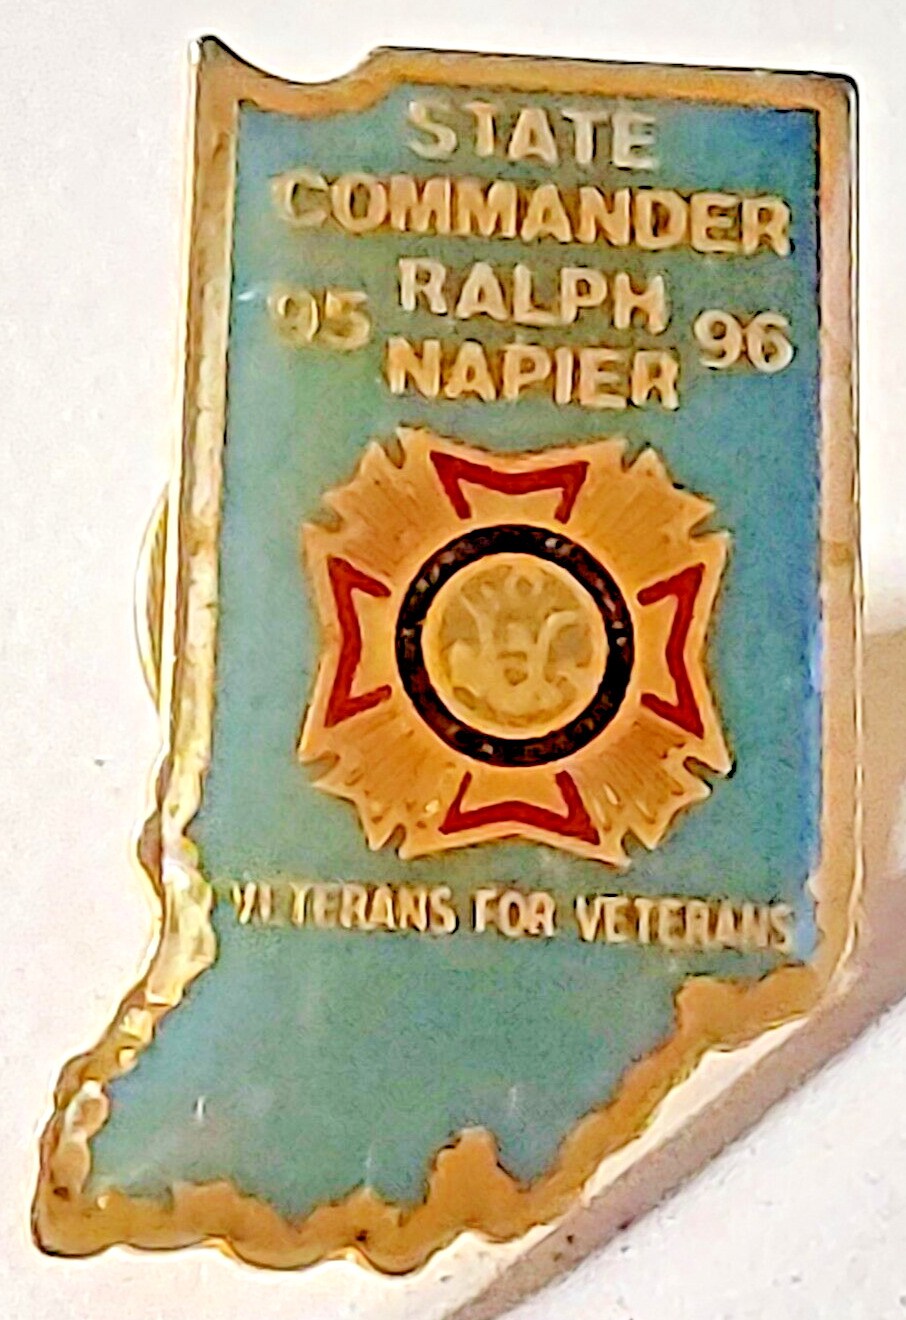 VFW Indiana 1995-1996 State Commander Ralph Napier Lapel Pin (092523)